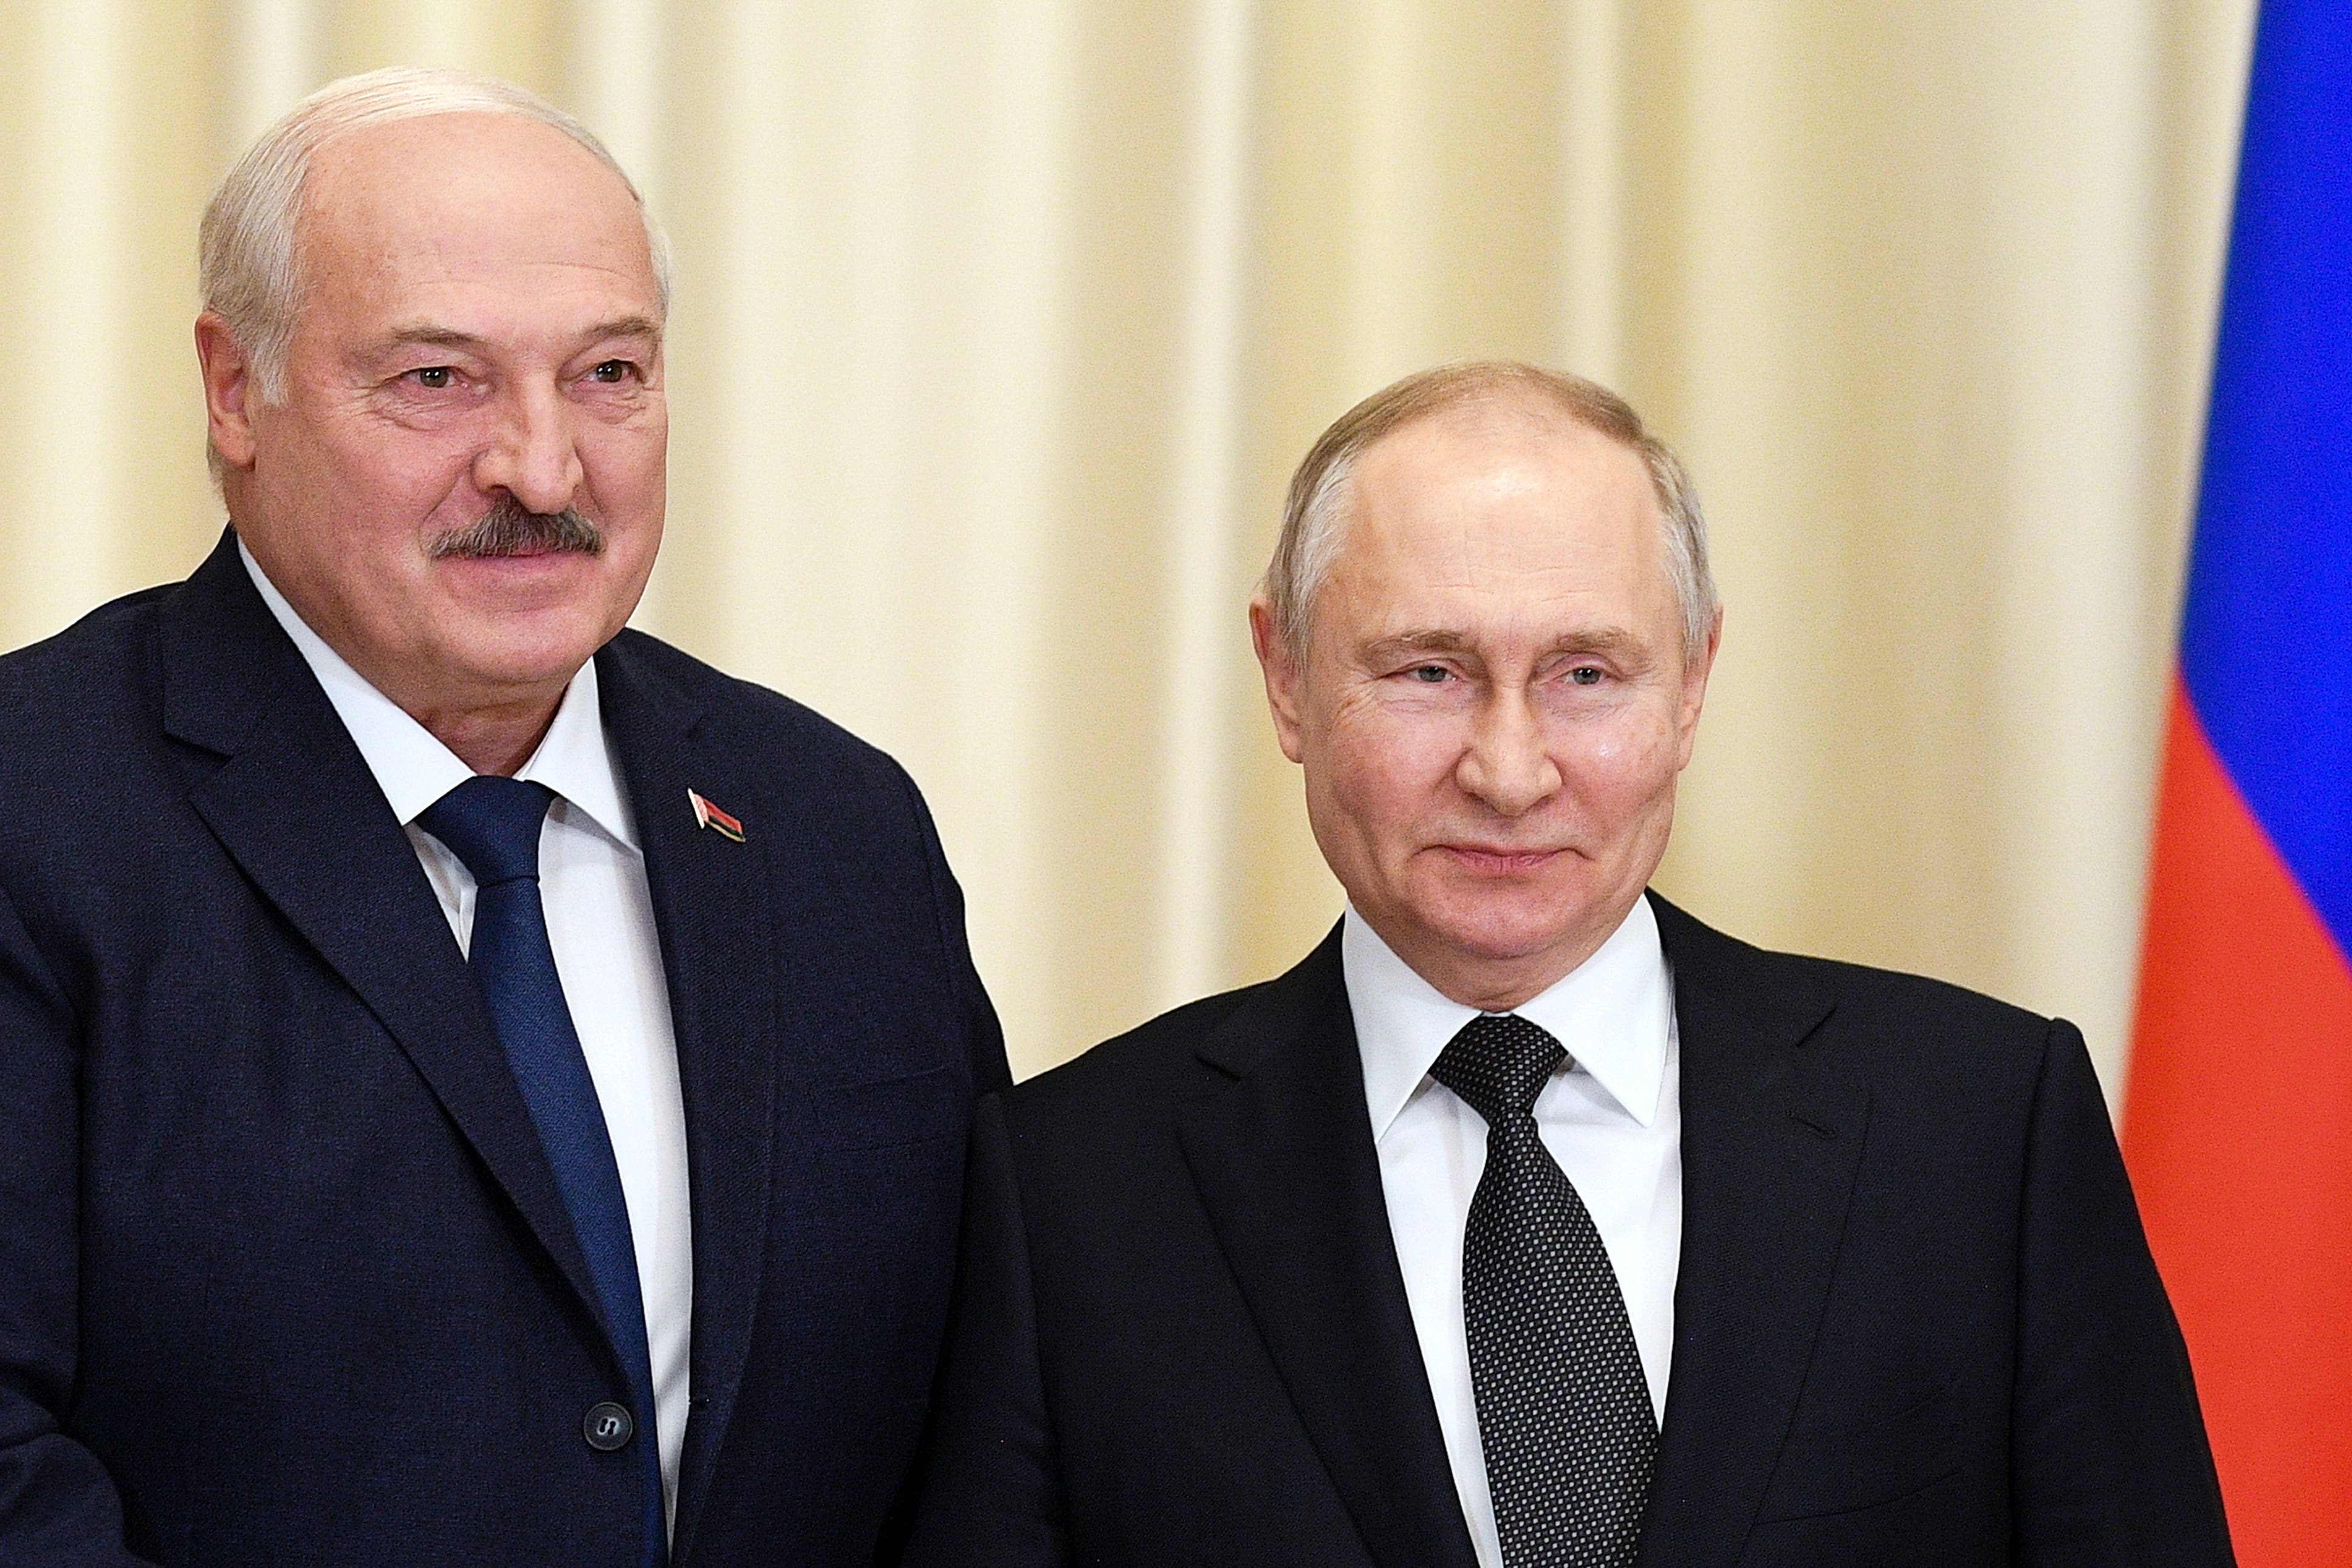 Belarusian President Alexander Lukashenko is a staunch ally of Russian President Vladimir Putin